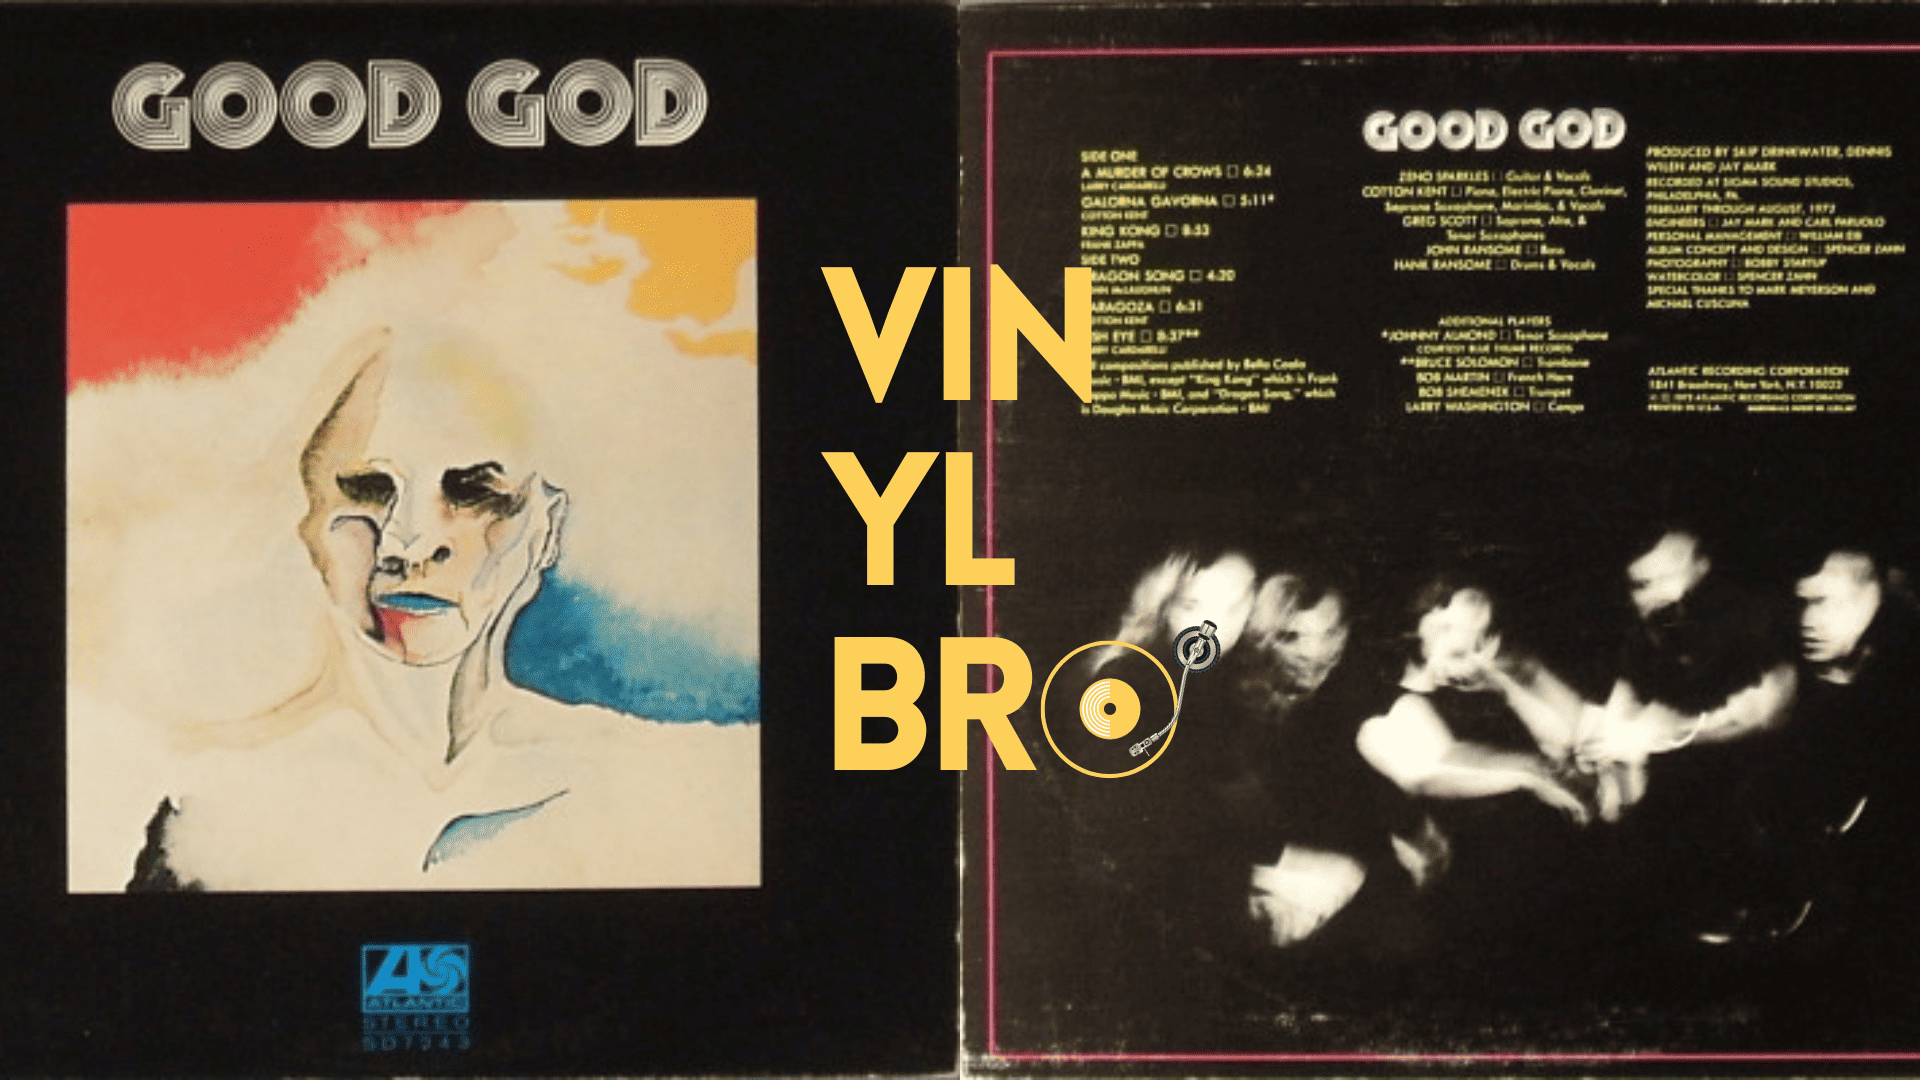 Good God - Good God | Album Review | Vinyl Bro